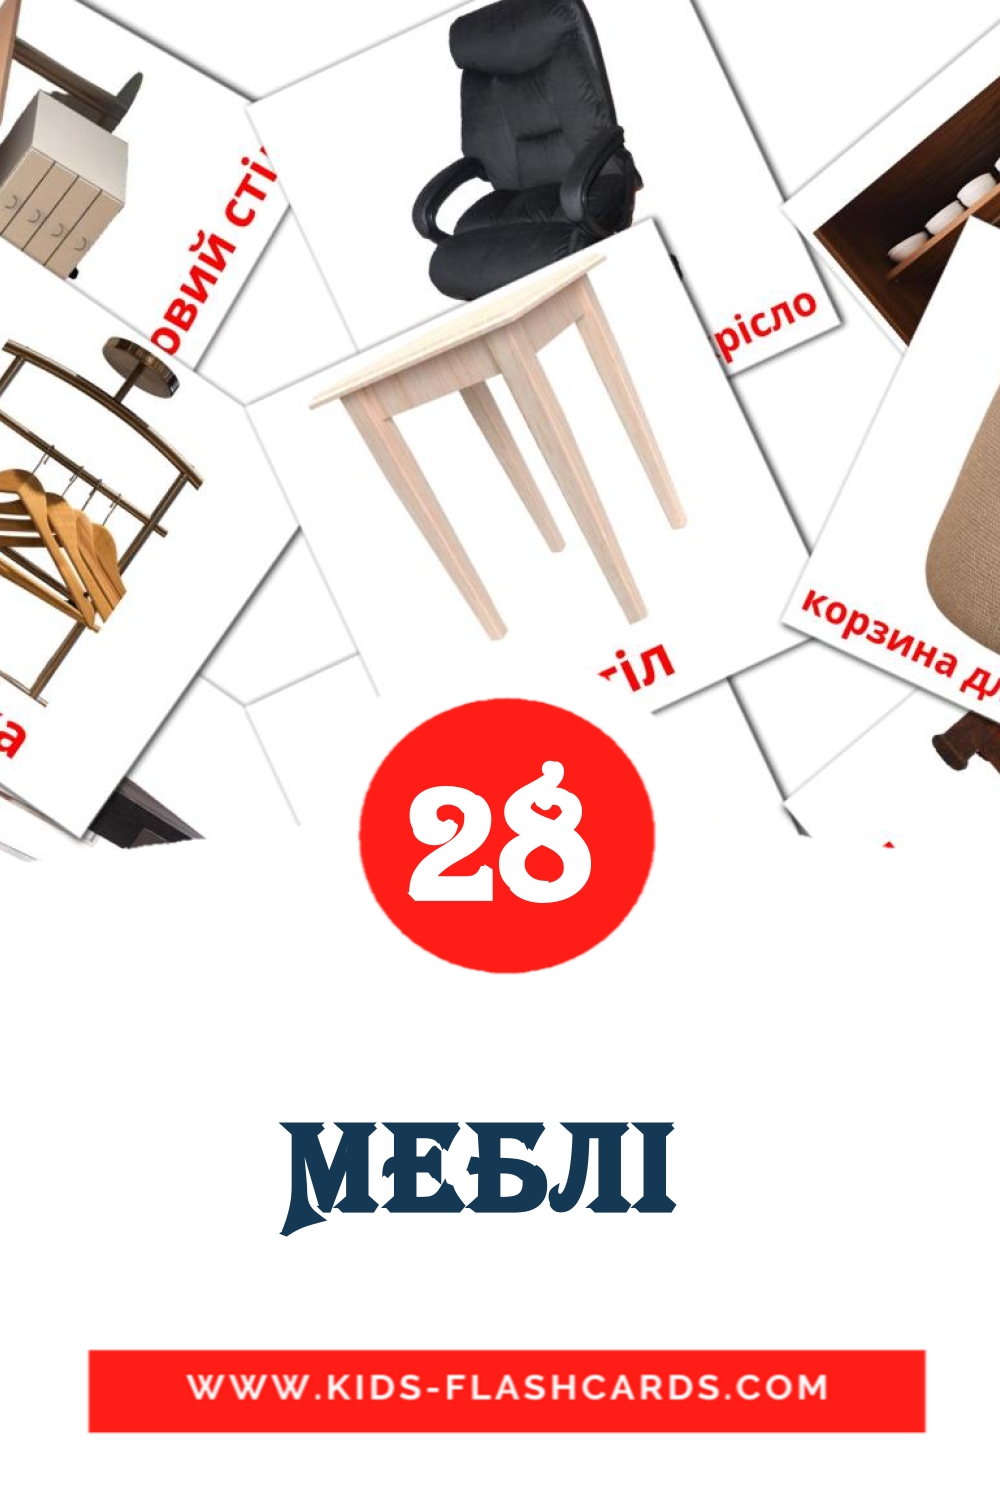 28 Меблі  Picture Cards for Kindergarden in ukrainian